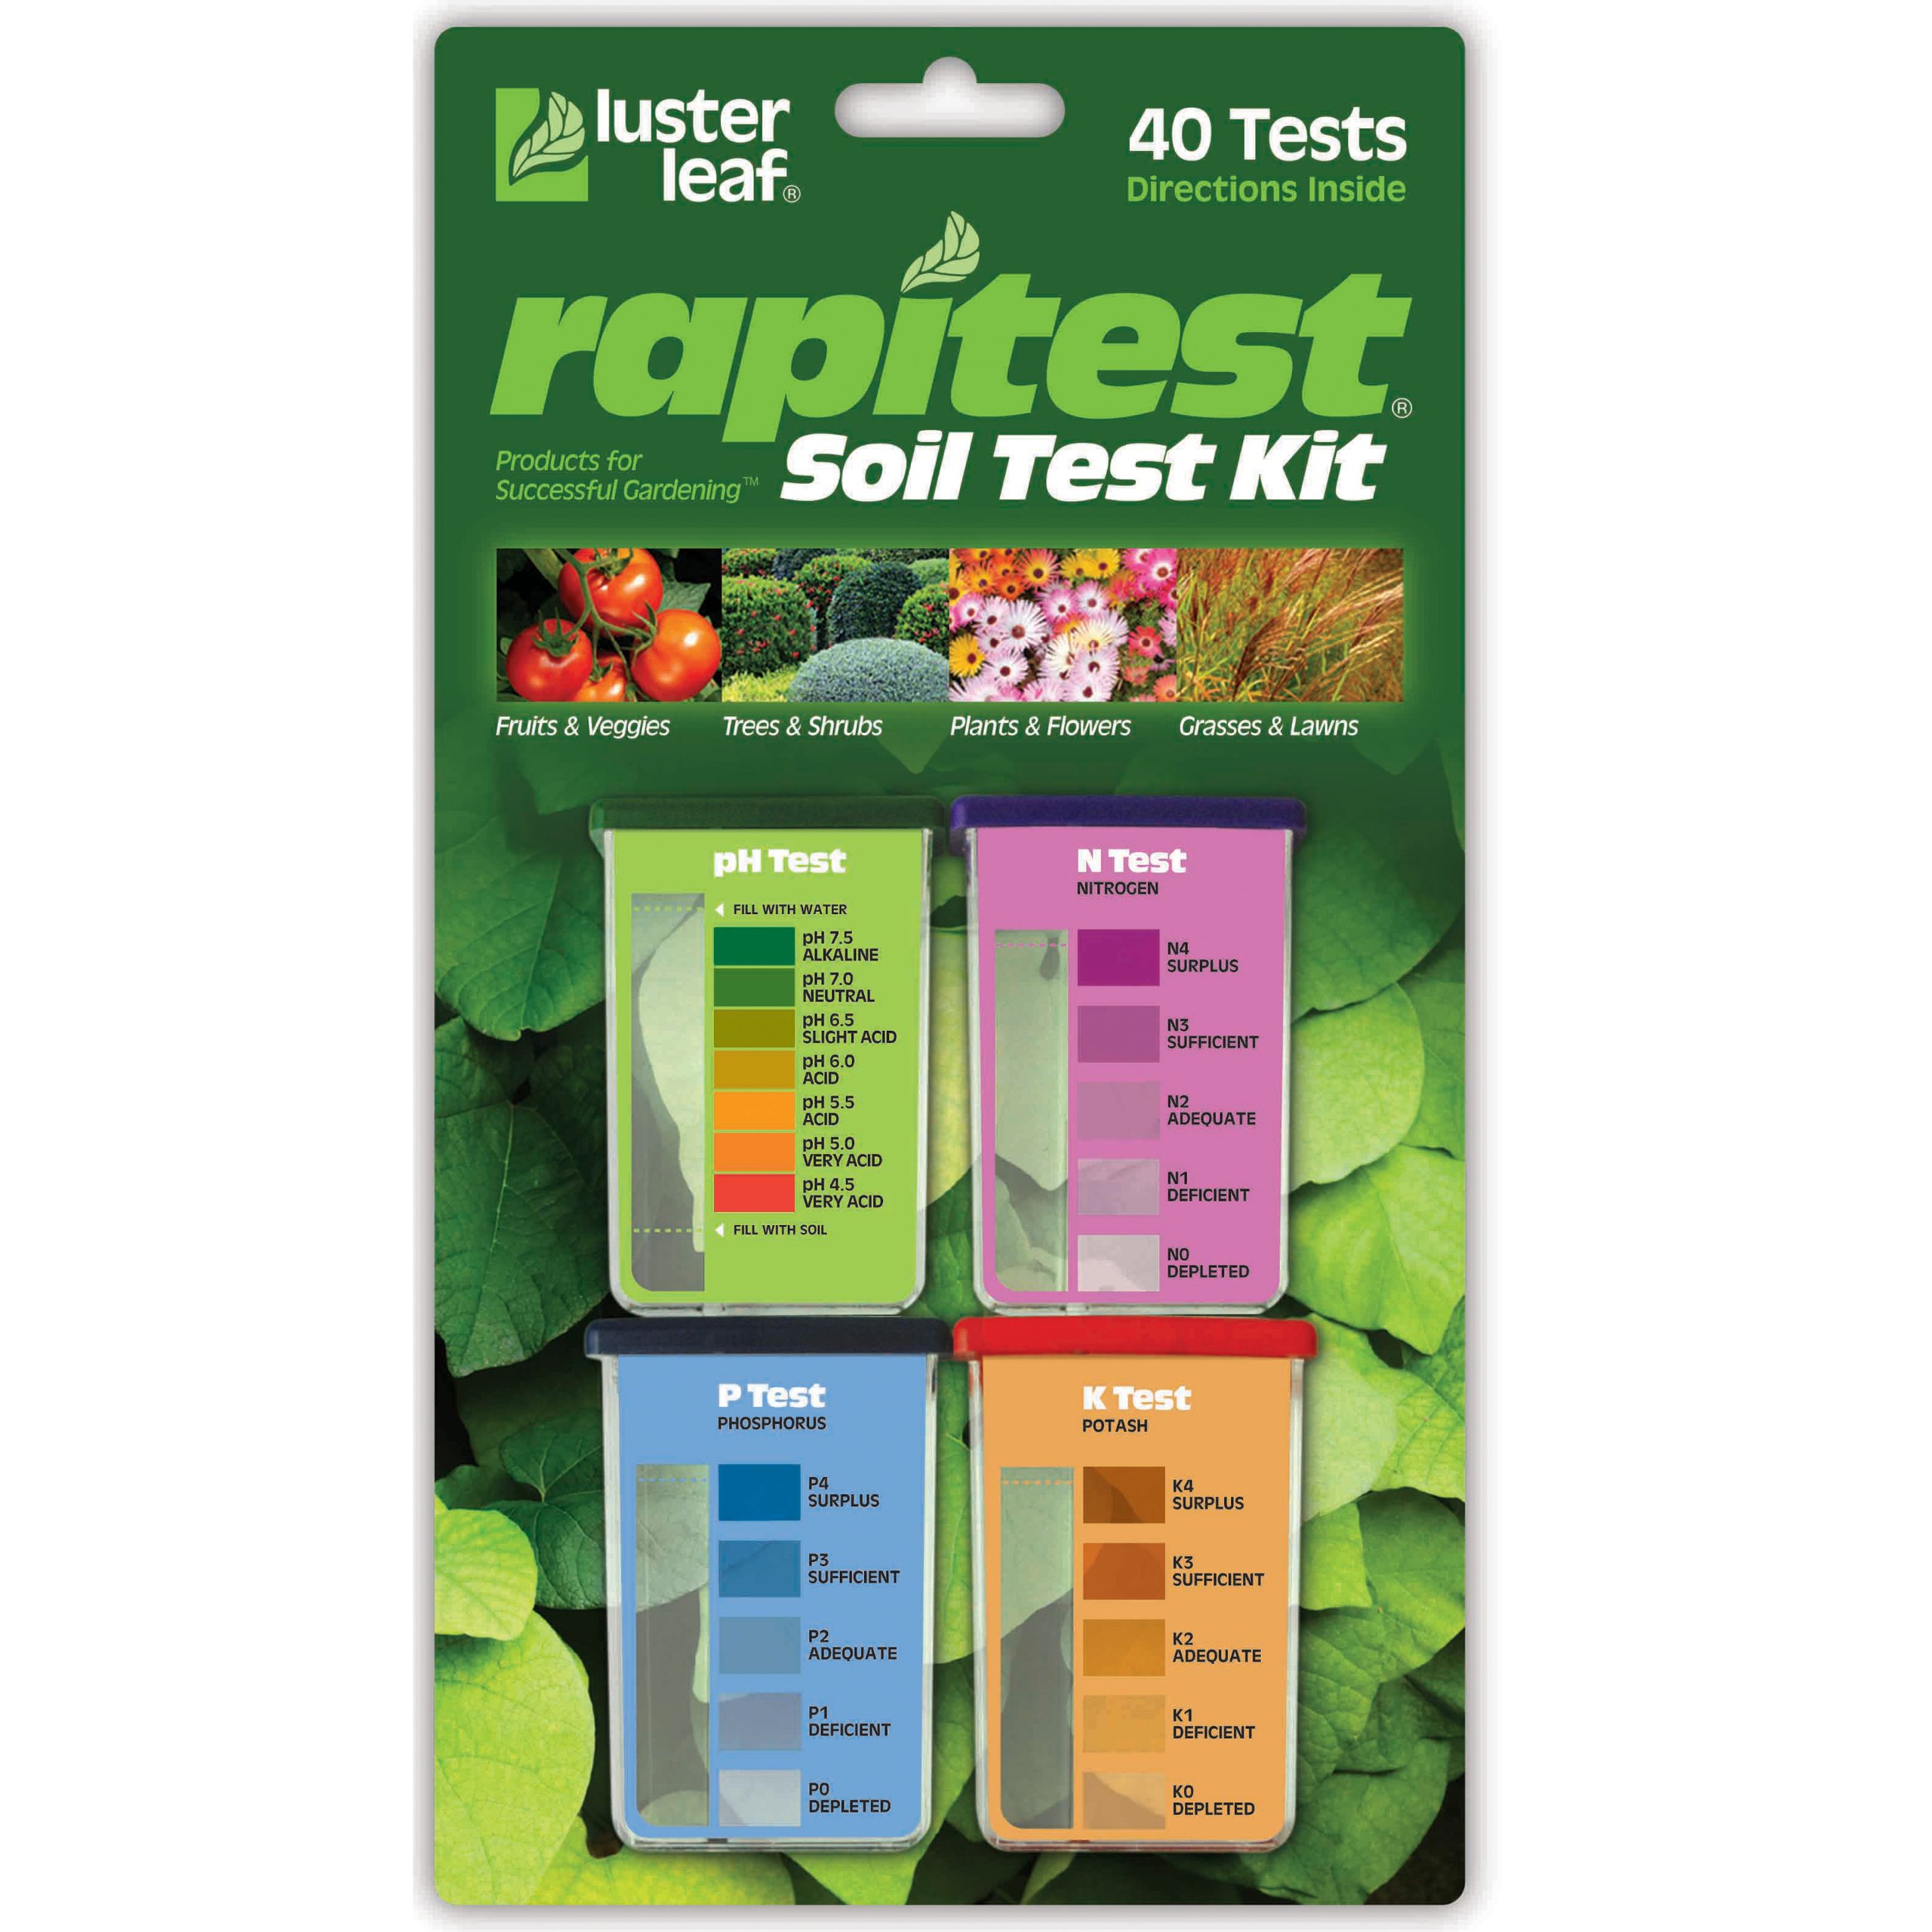 How to Use Rapitest Soil Test Kit